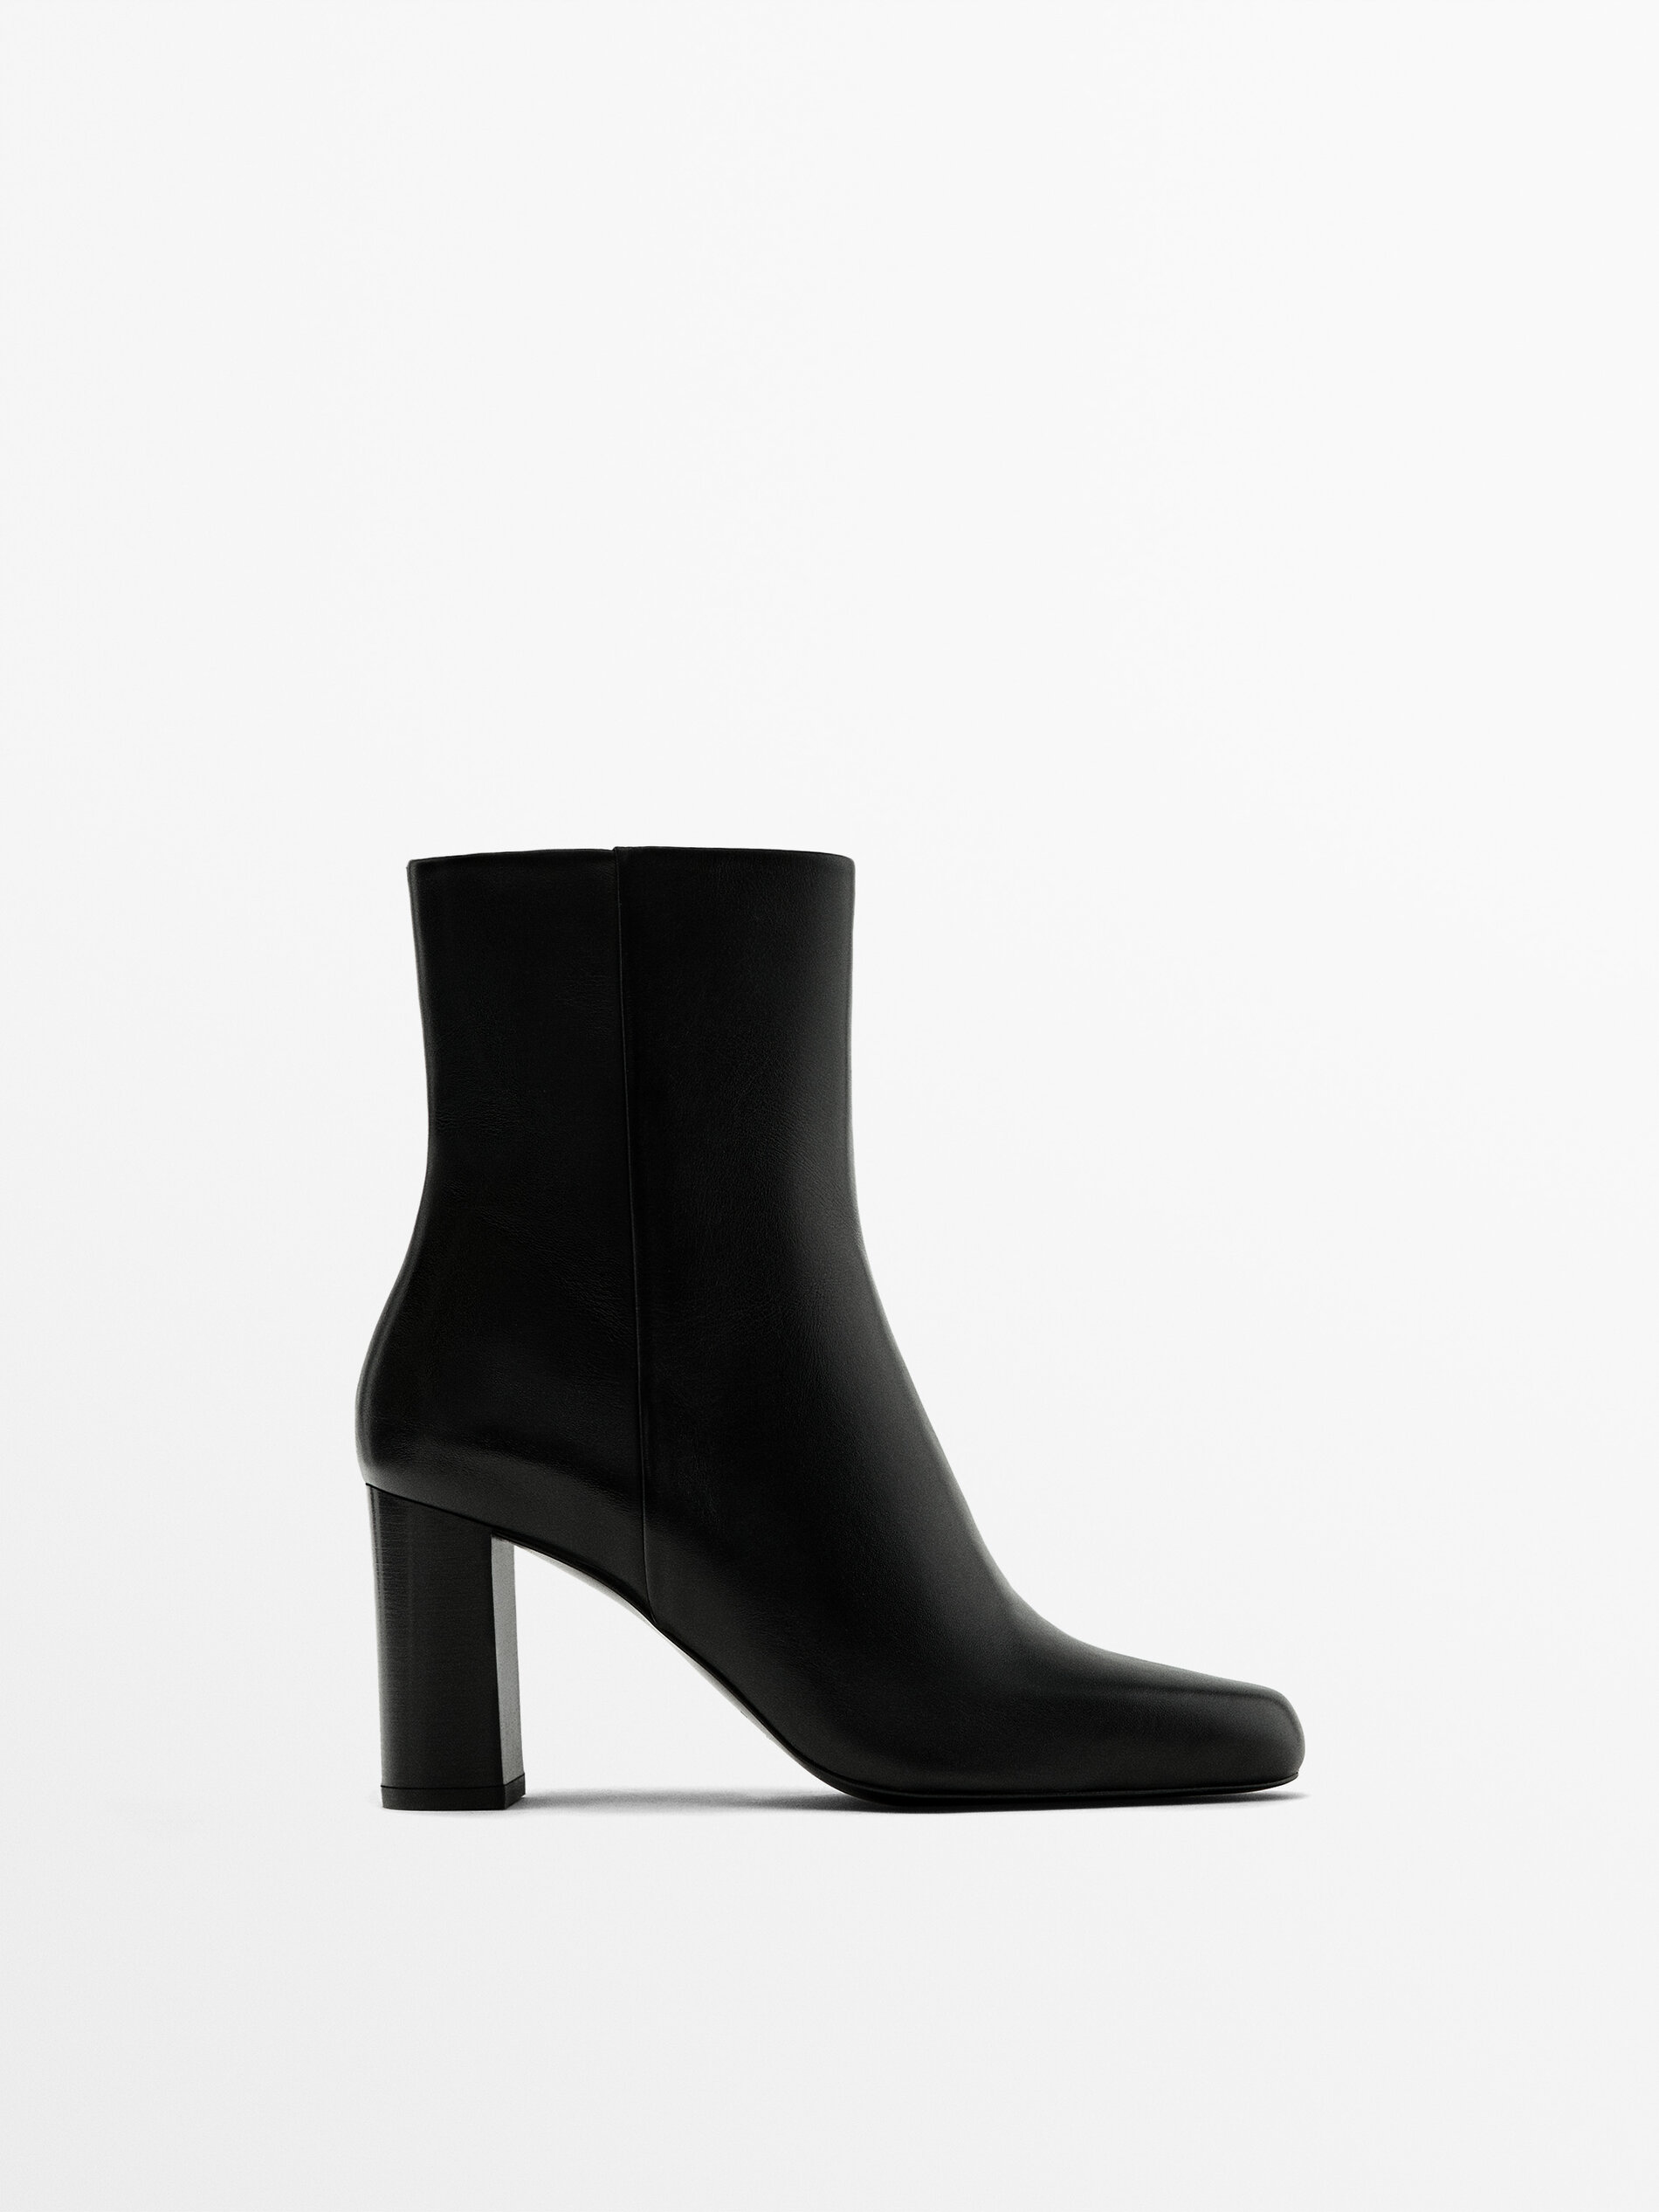 Giaro ALIA BLACK MATTE ANKLE BOOTS - Giaro High Heels | Official store -  All Vegan High Heels